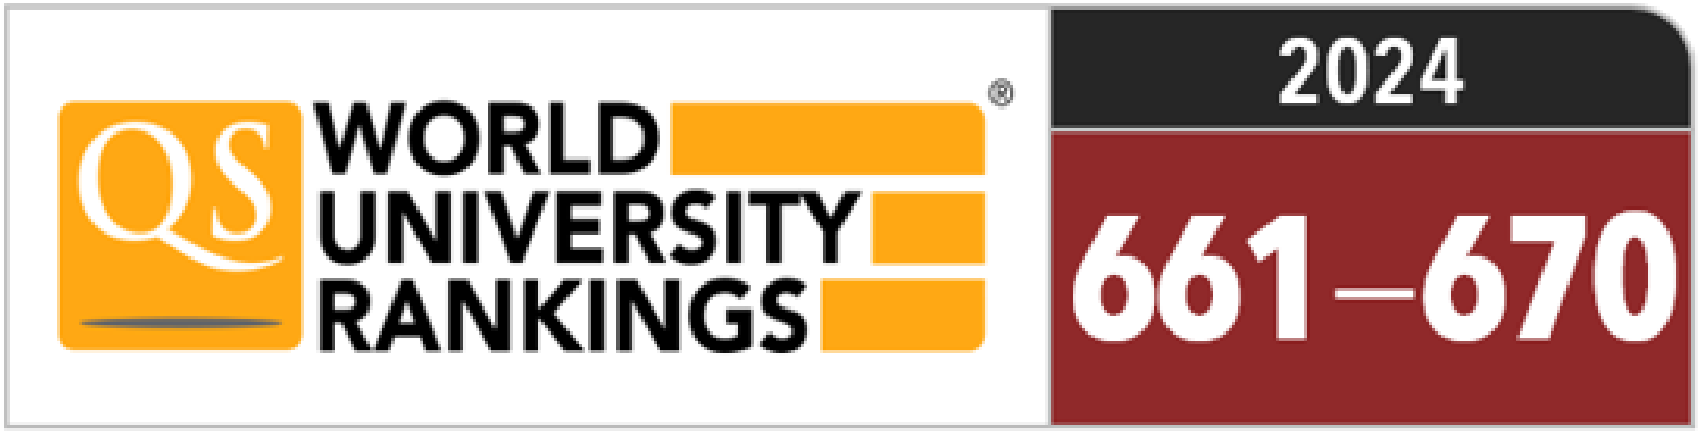 La URV se situa en el grup 661-670 del QS World University Rankings